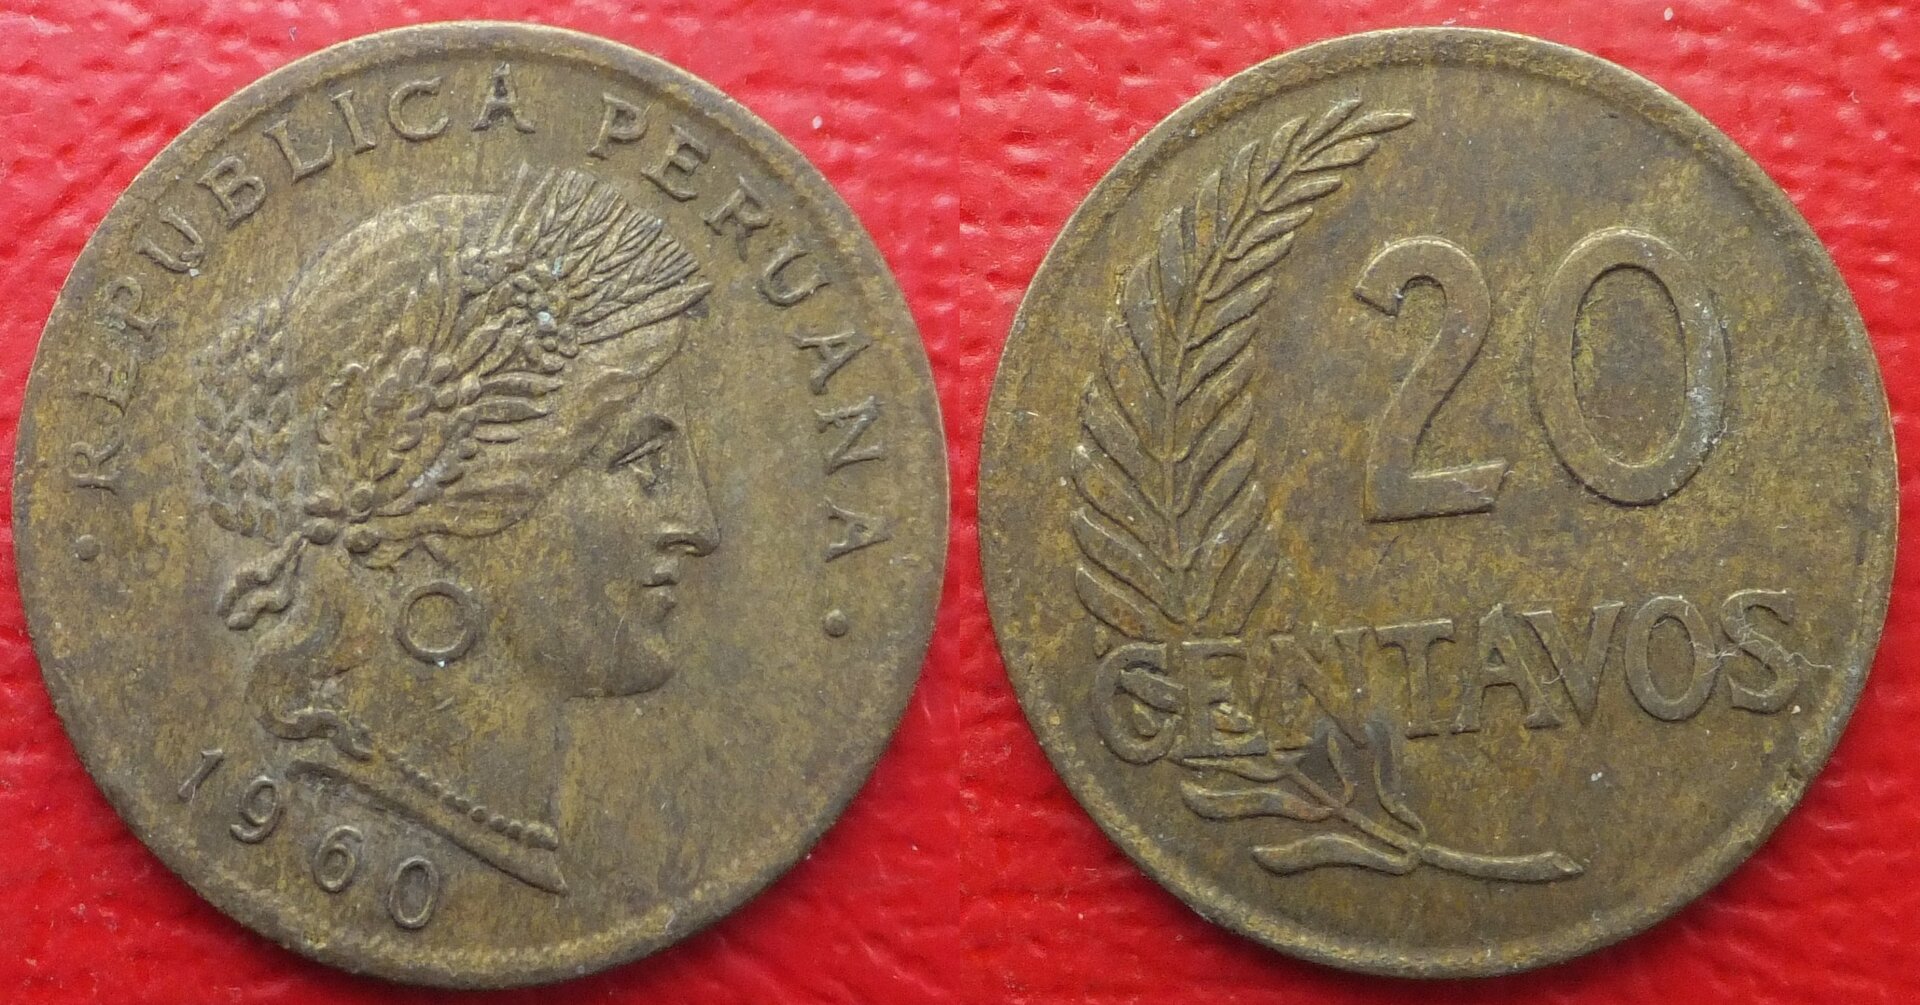 Peru 20 centavos 1960 (3).jpg